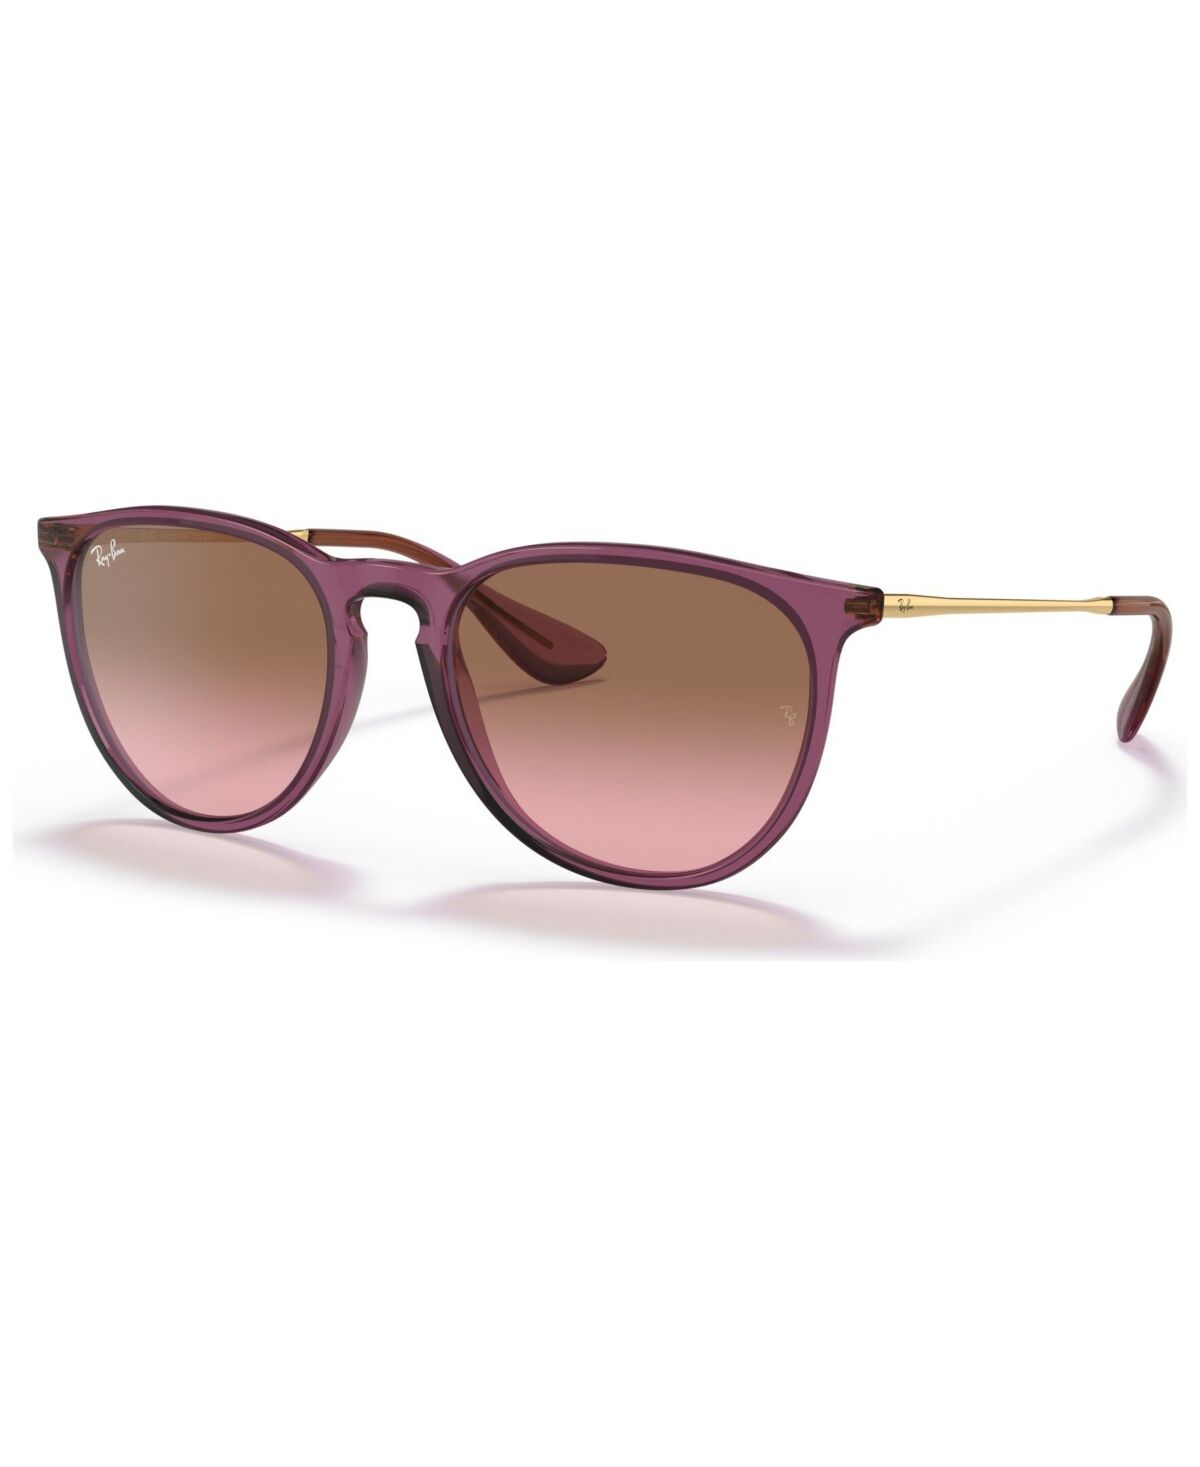 Ray-Ban Sunglasses, RB4171 Erika - Transparent Violet